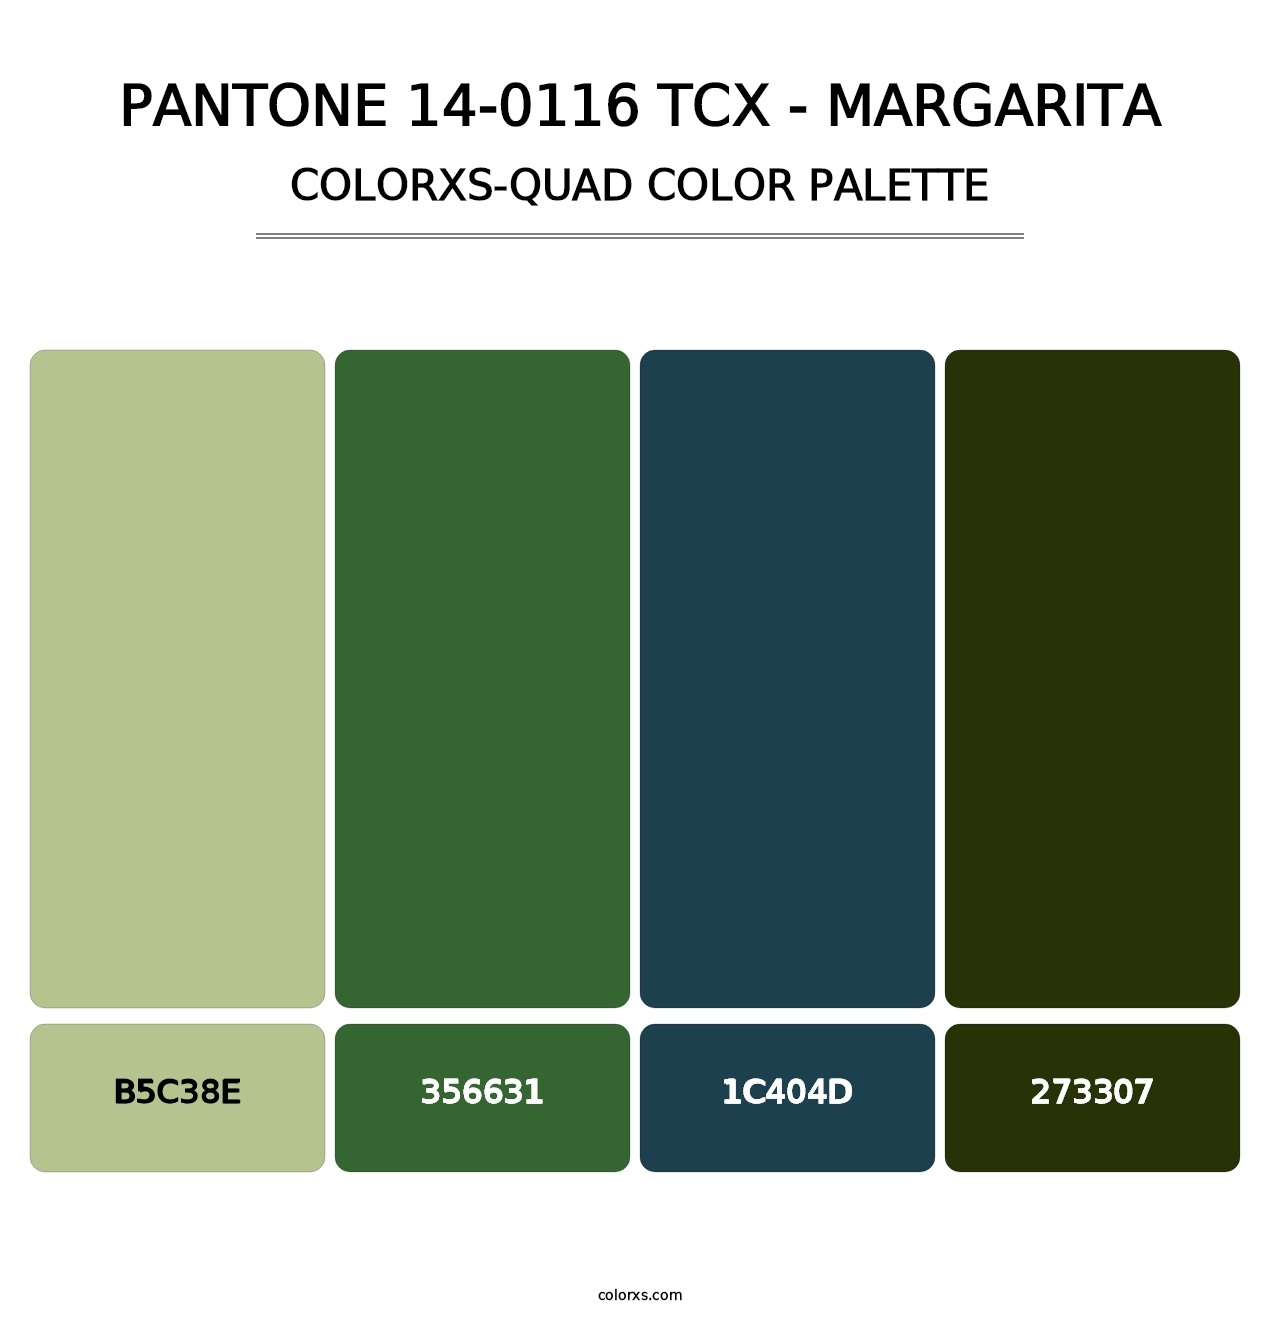 PANTONE 14-0116 TCX - Margarita - Colorxs Quad Palette